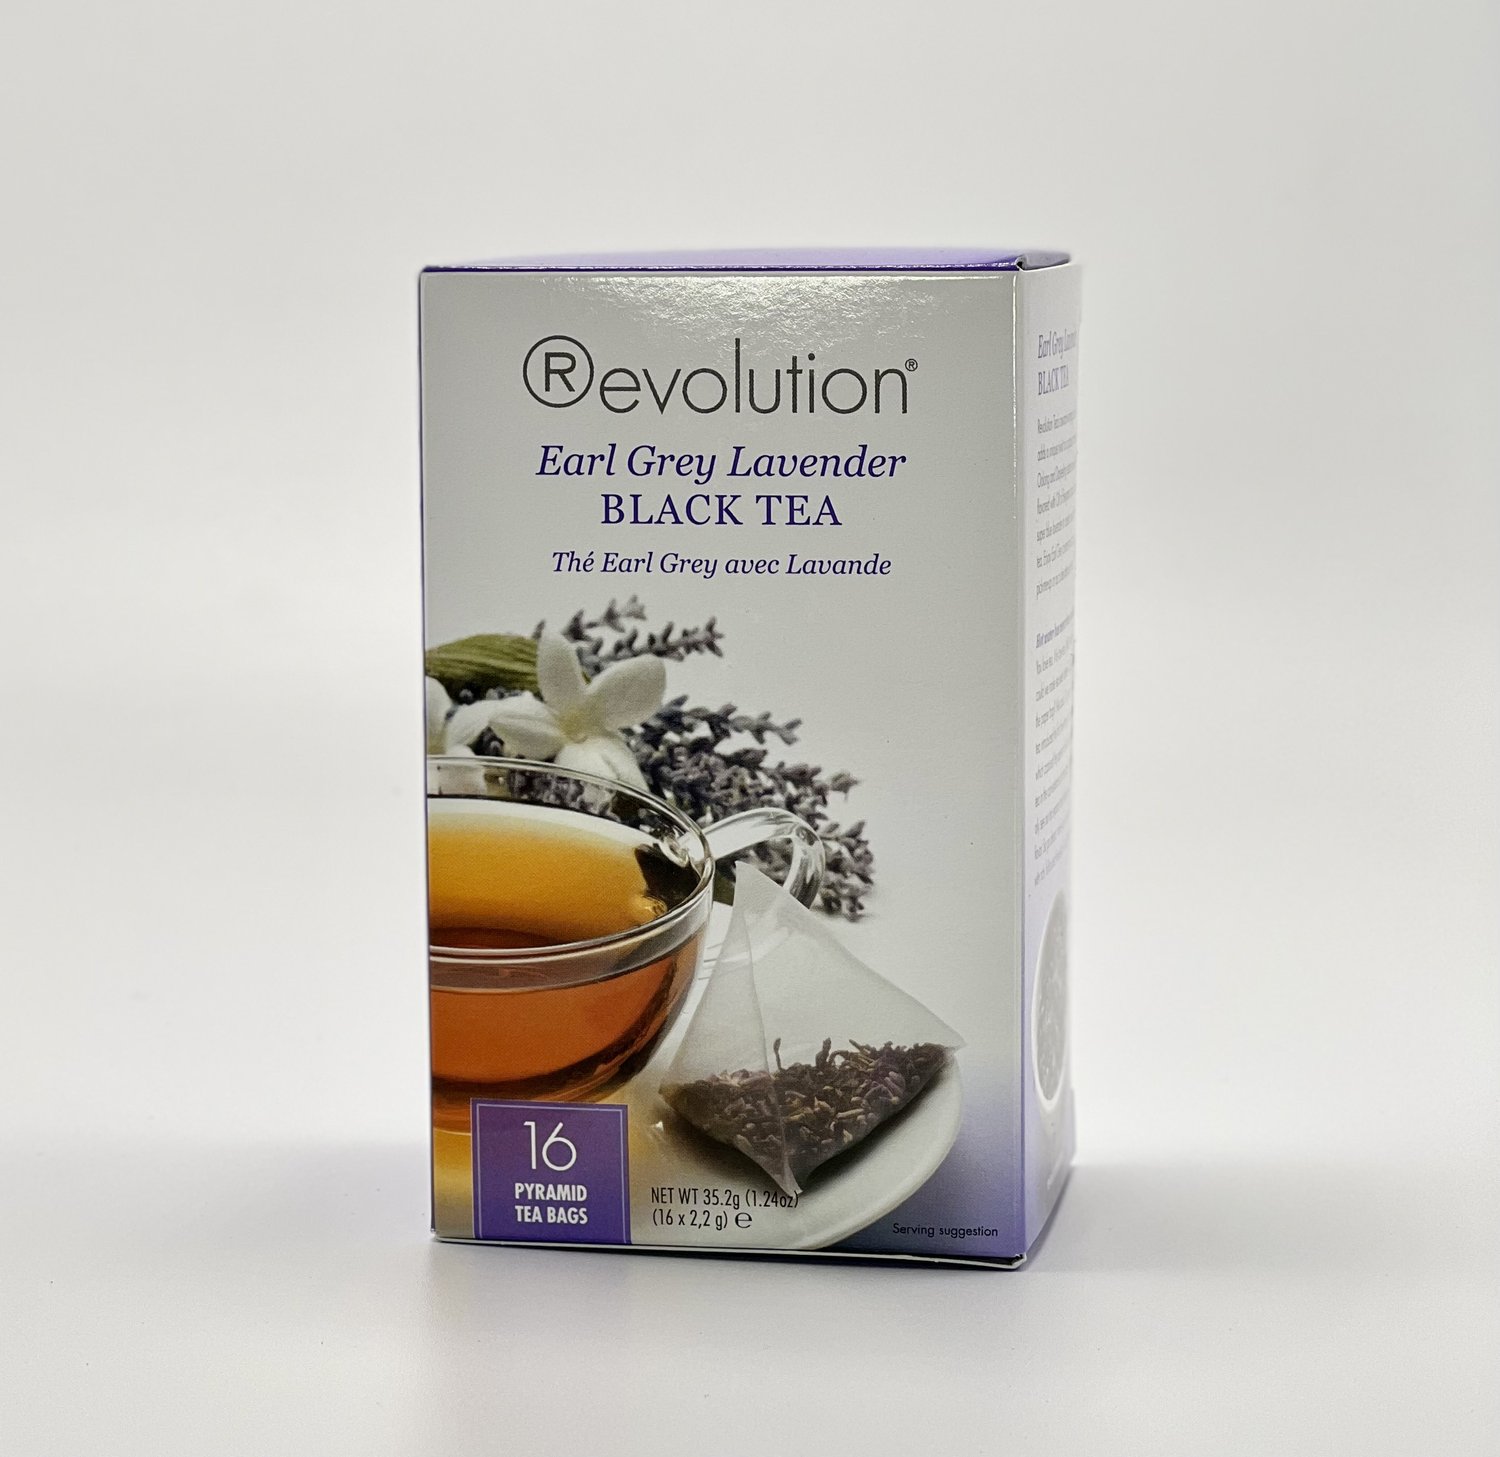 Earl Grey Crème Tea — Lavender & Thieves Co. - Artisan Teas And Gifts